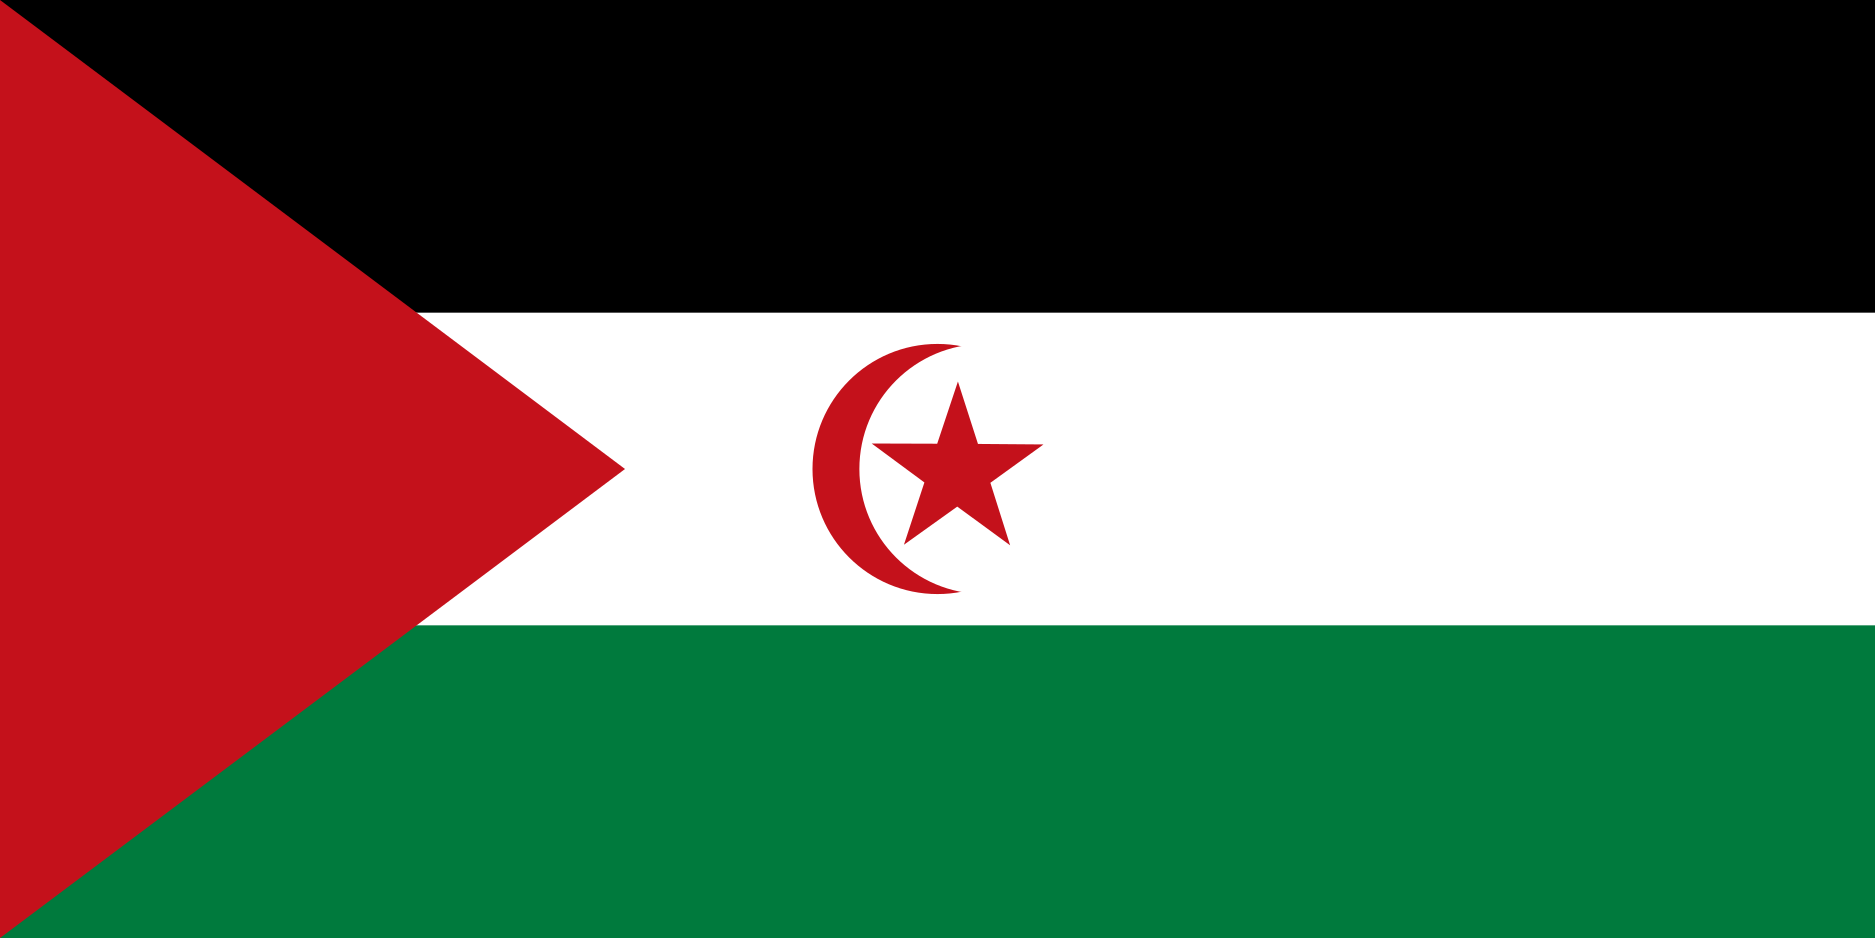 The Sahrawi Arab Democratic Republic Flag Image - Free Download